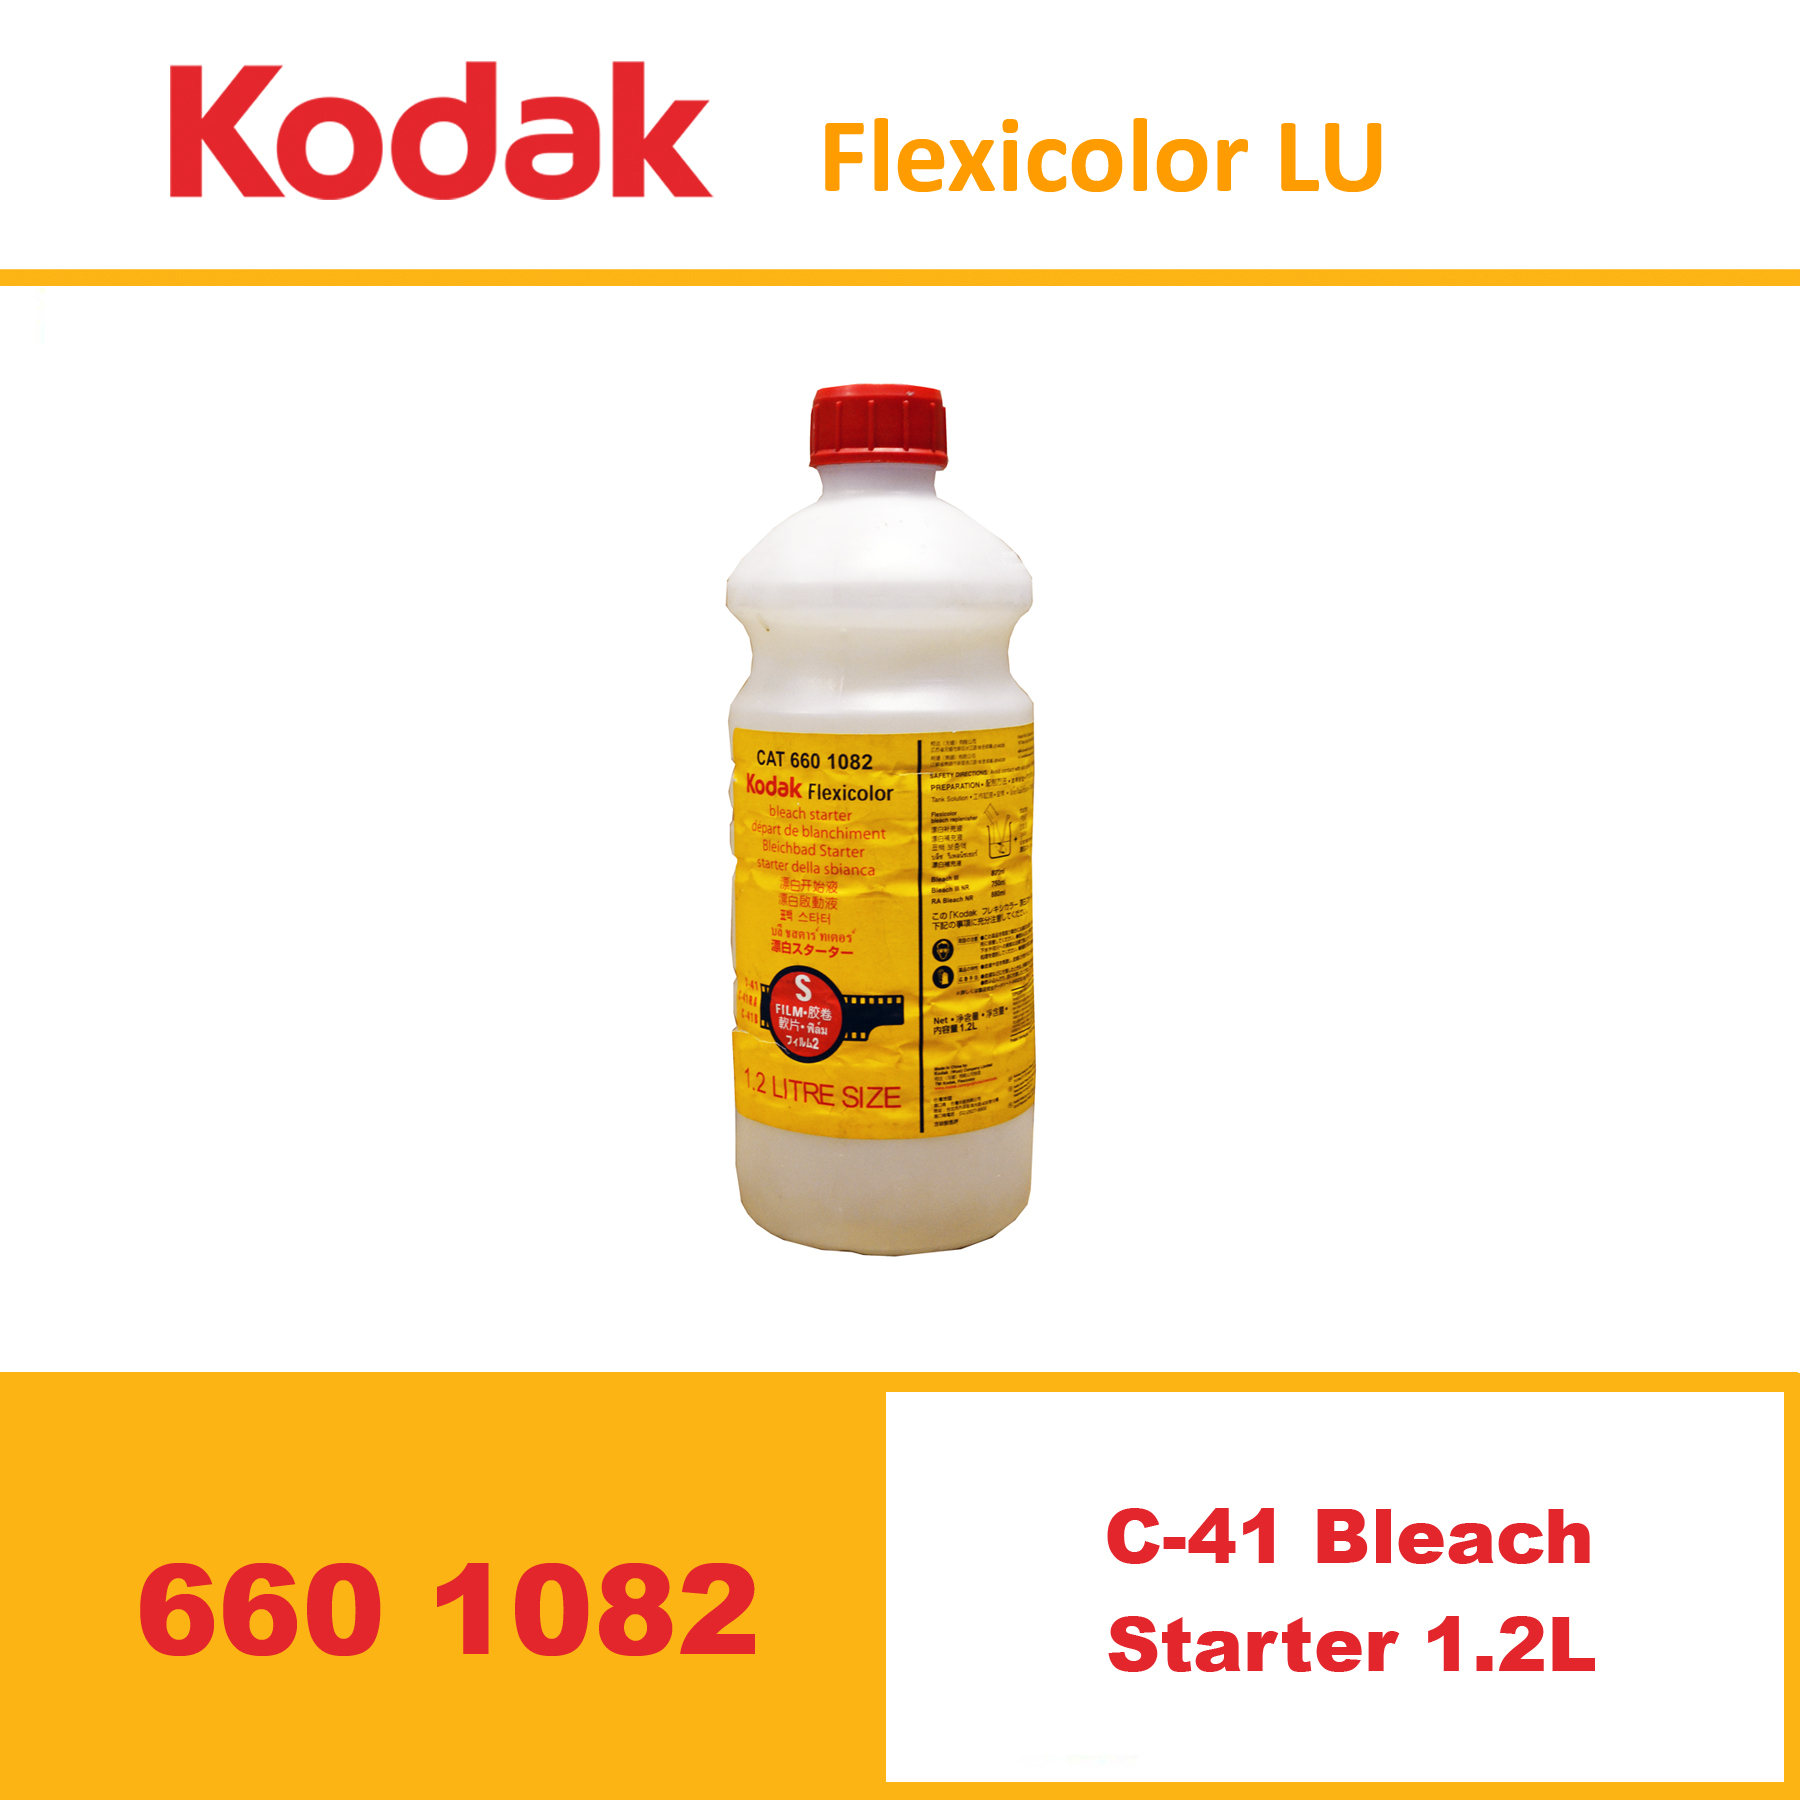 Kodak 1.2L Flex color (C-41) Bleach Starter for Color Negative Film